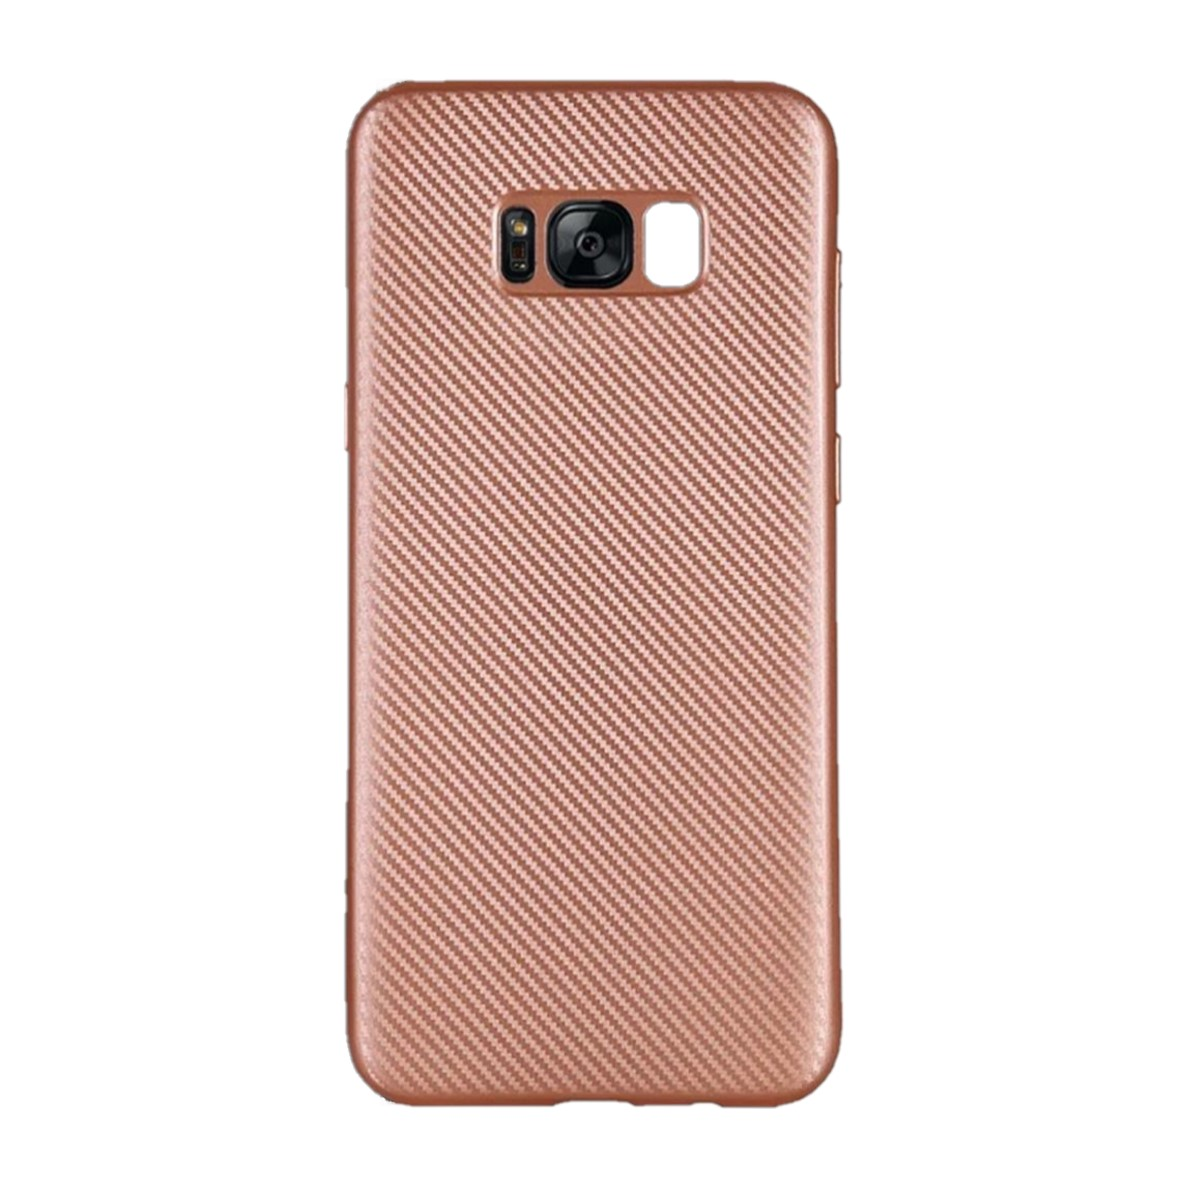 Handycase Roségold im Plus, Backcover, S8 Galaxy COVERKINGZ Look, Samsung, Carbon